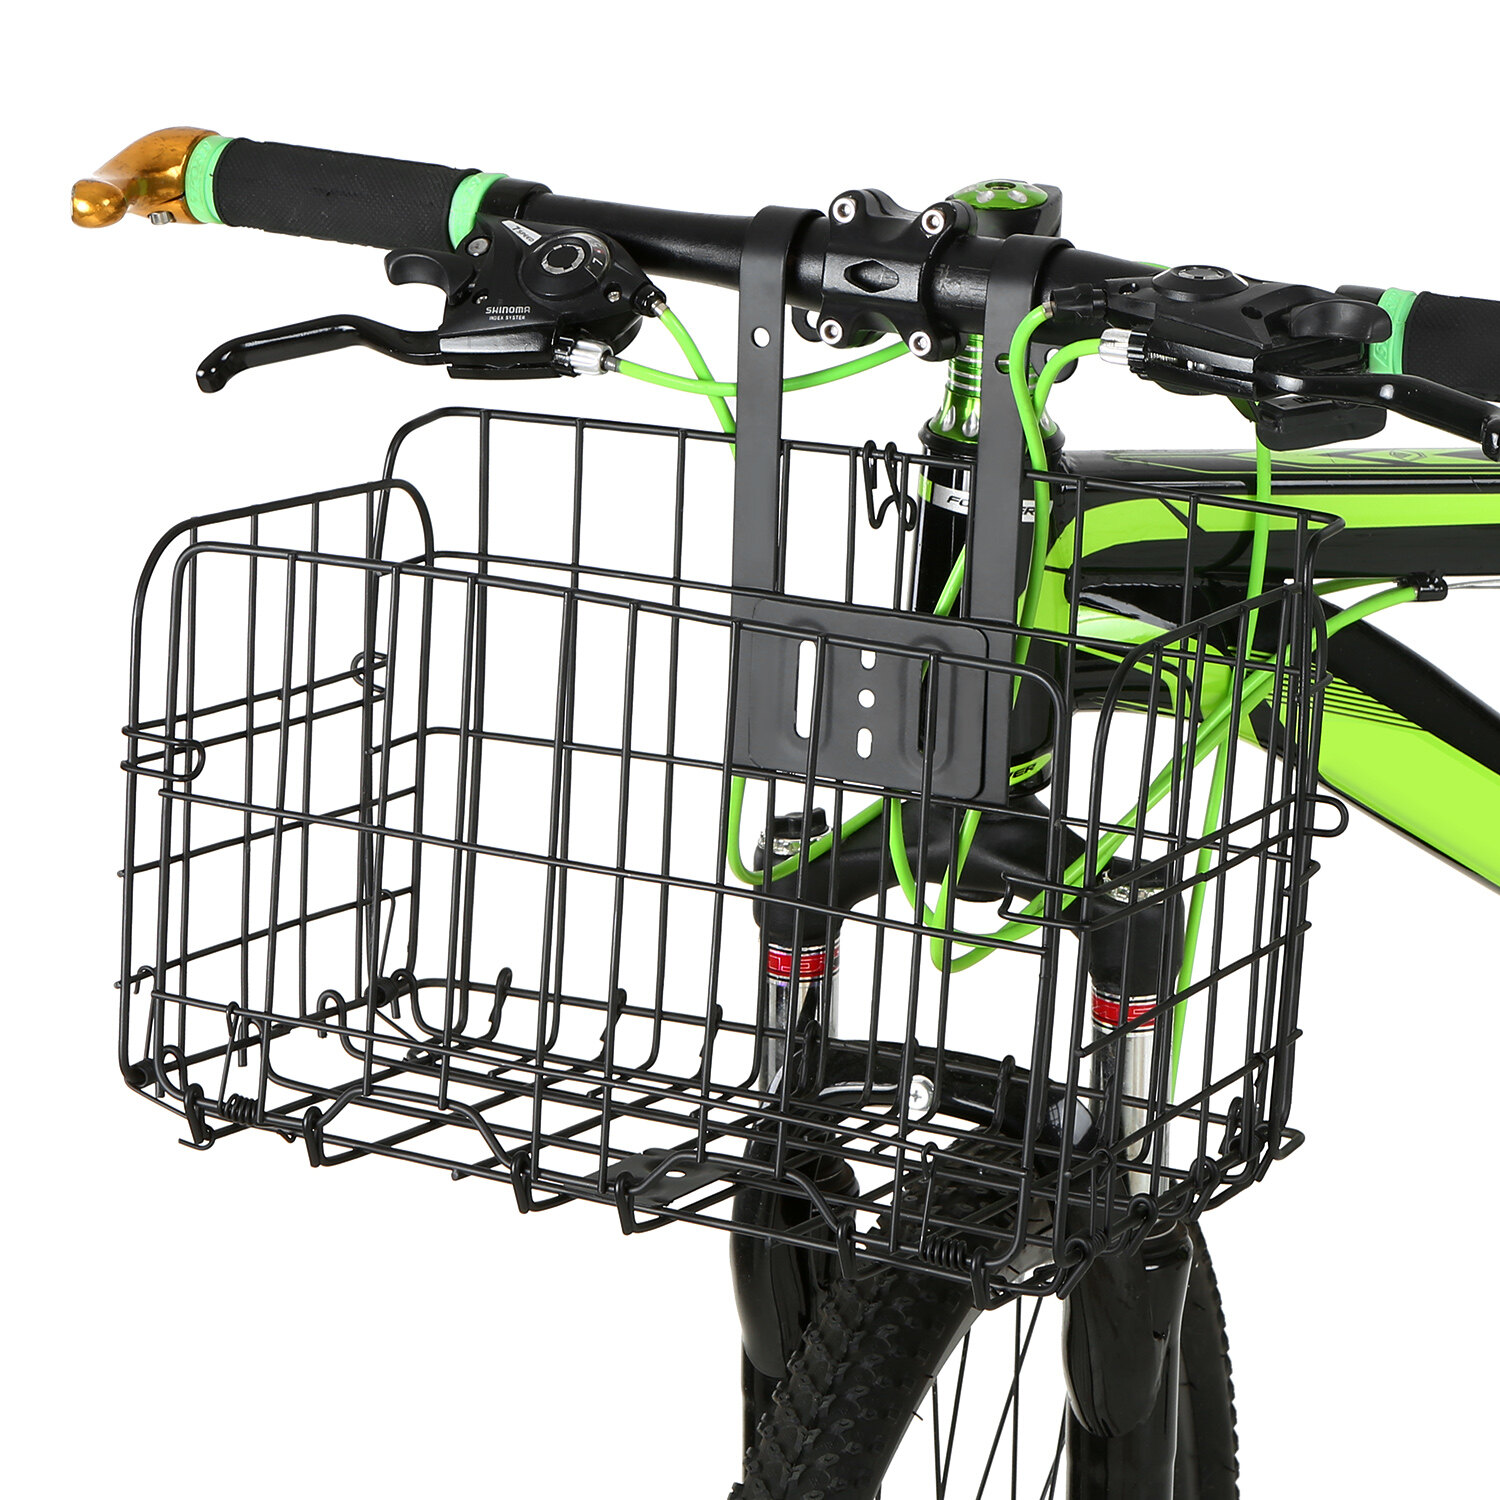 stainless basket for bike